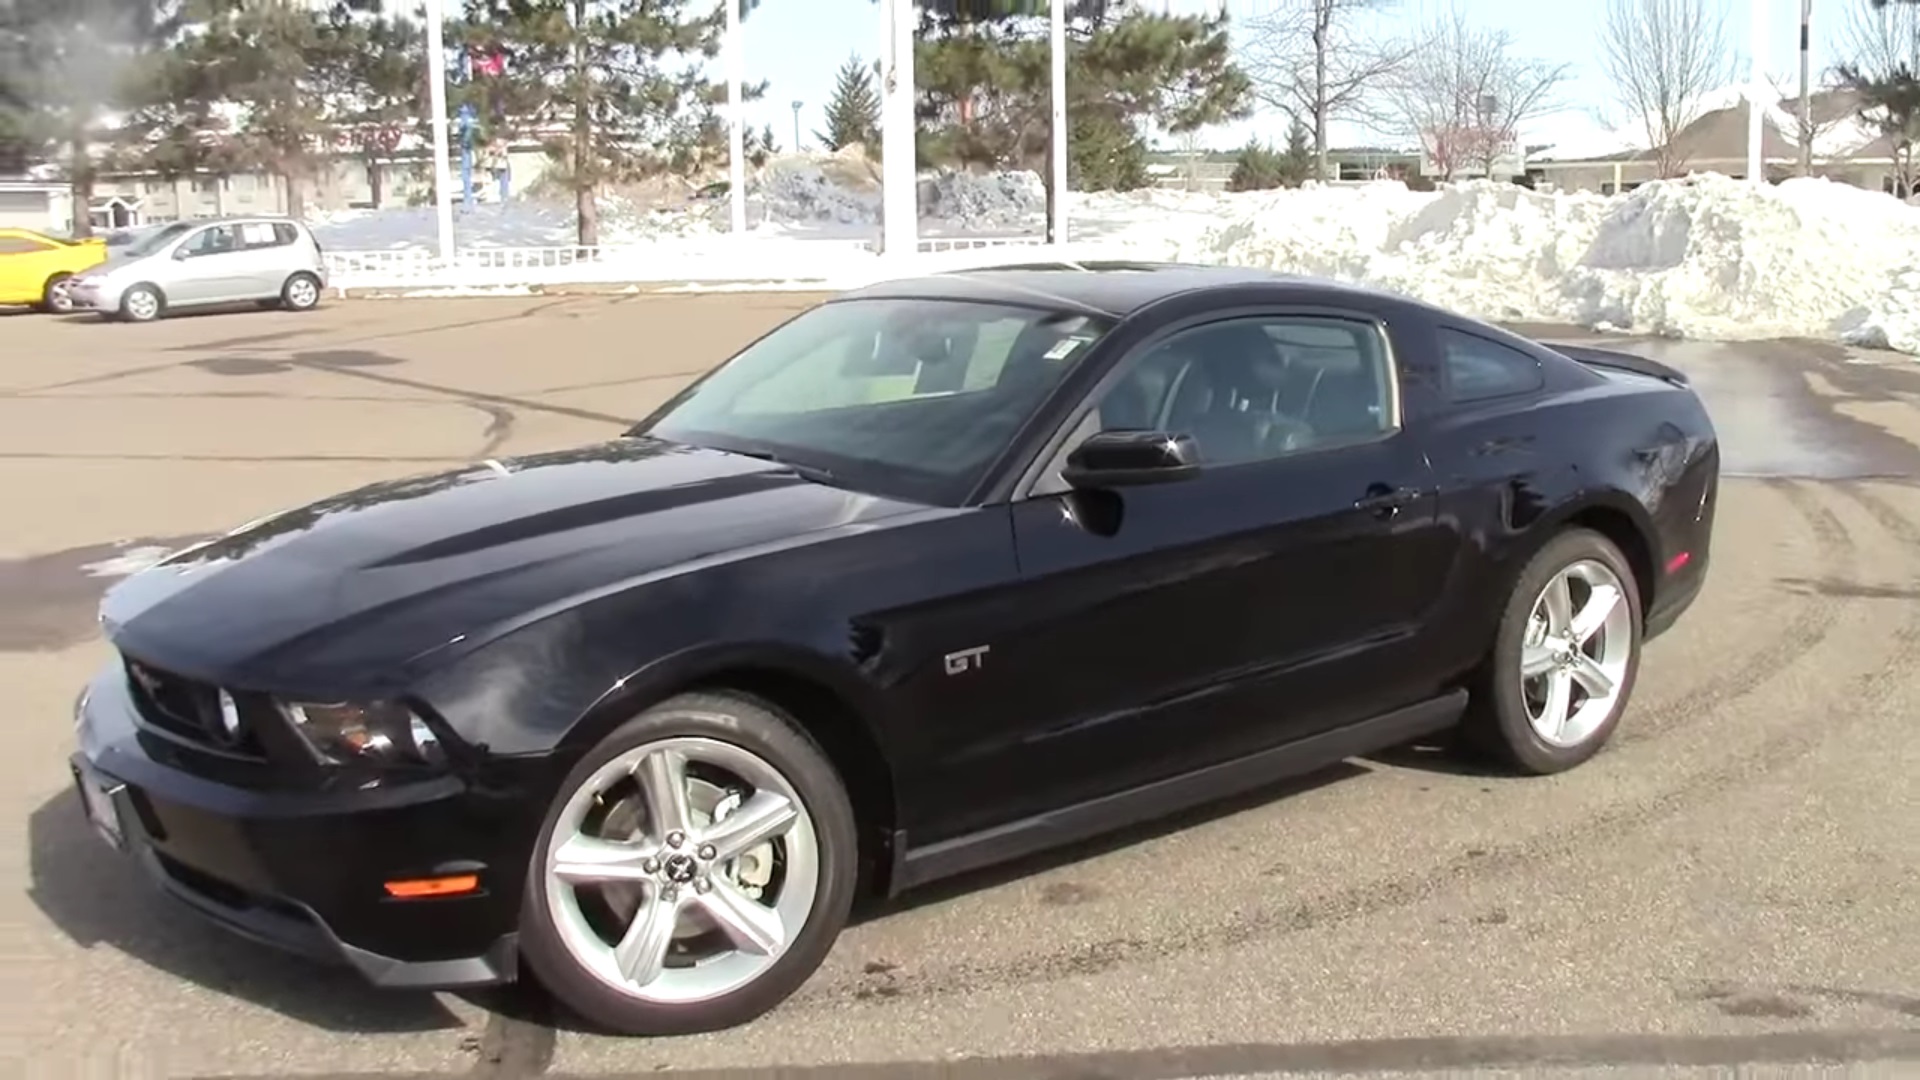 Video: 2010 Ford Mustang GT 4.6L V8 Walkaround